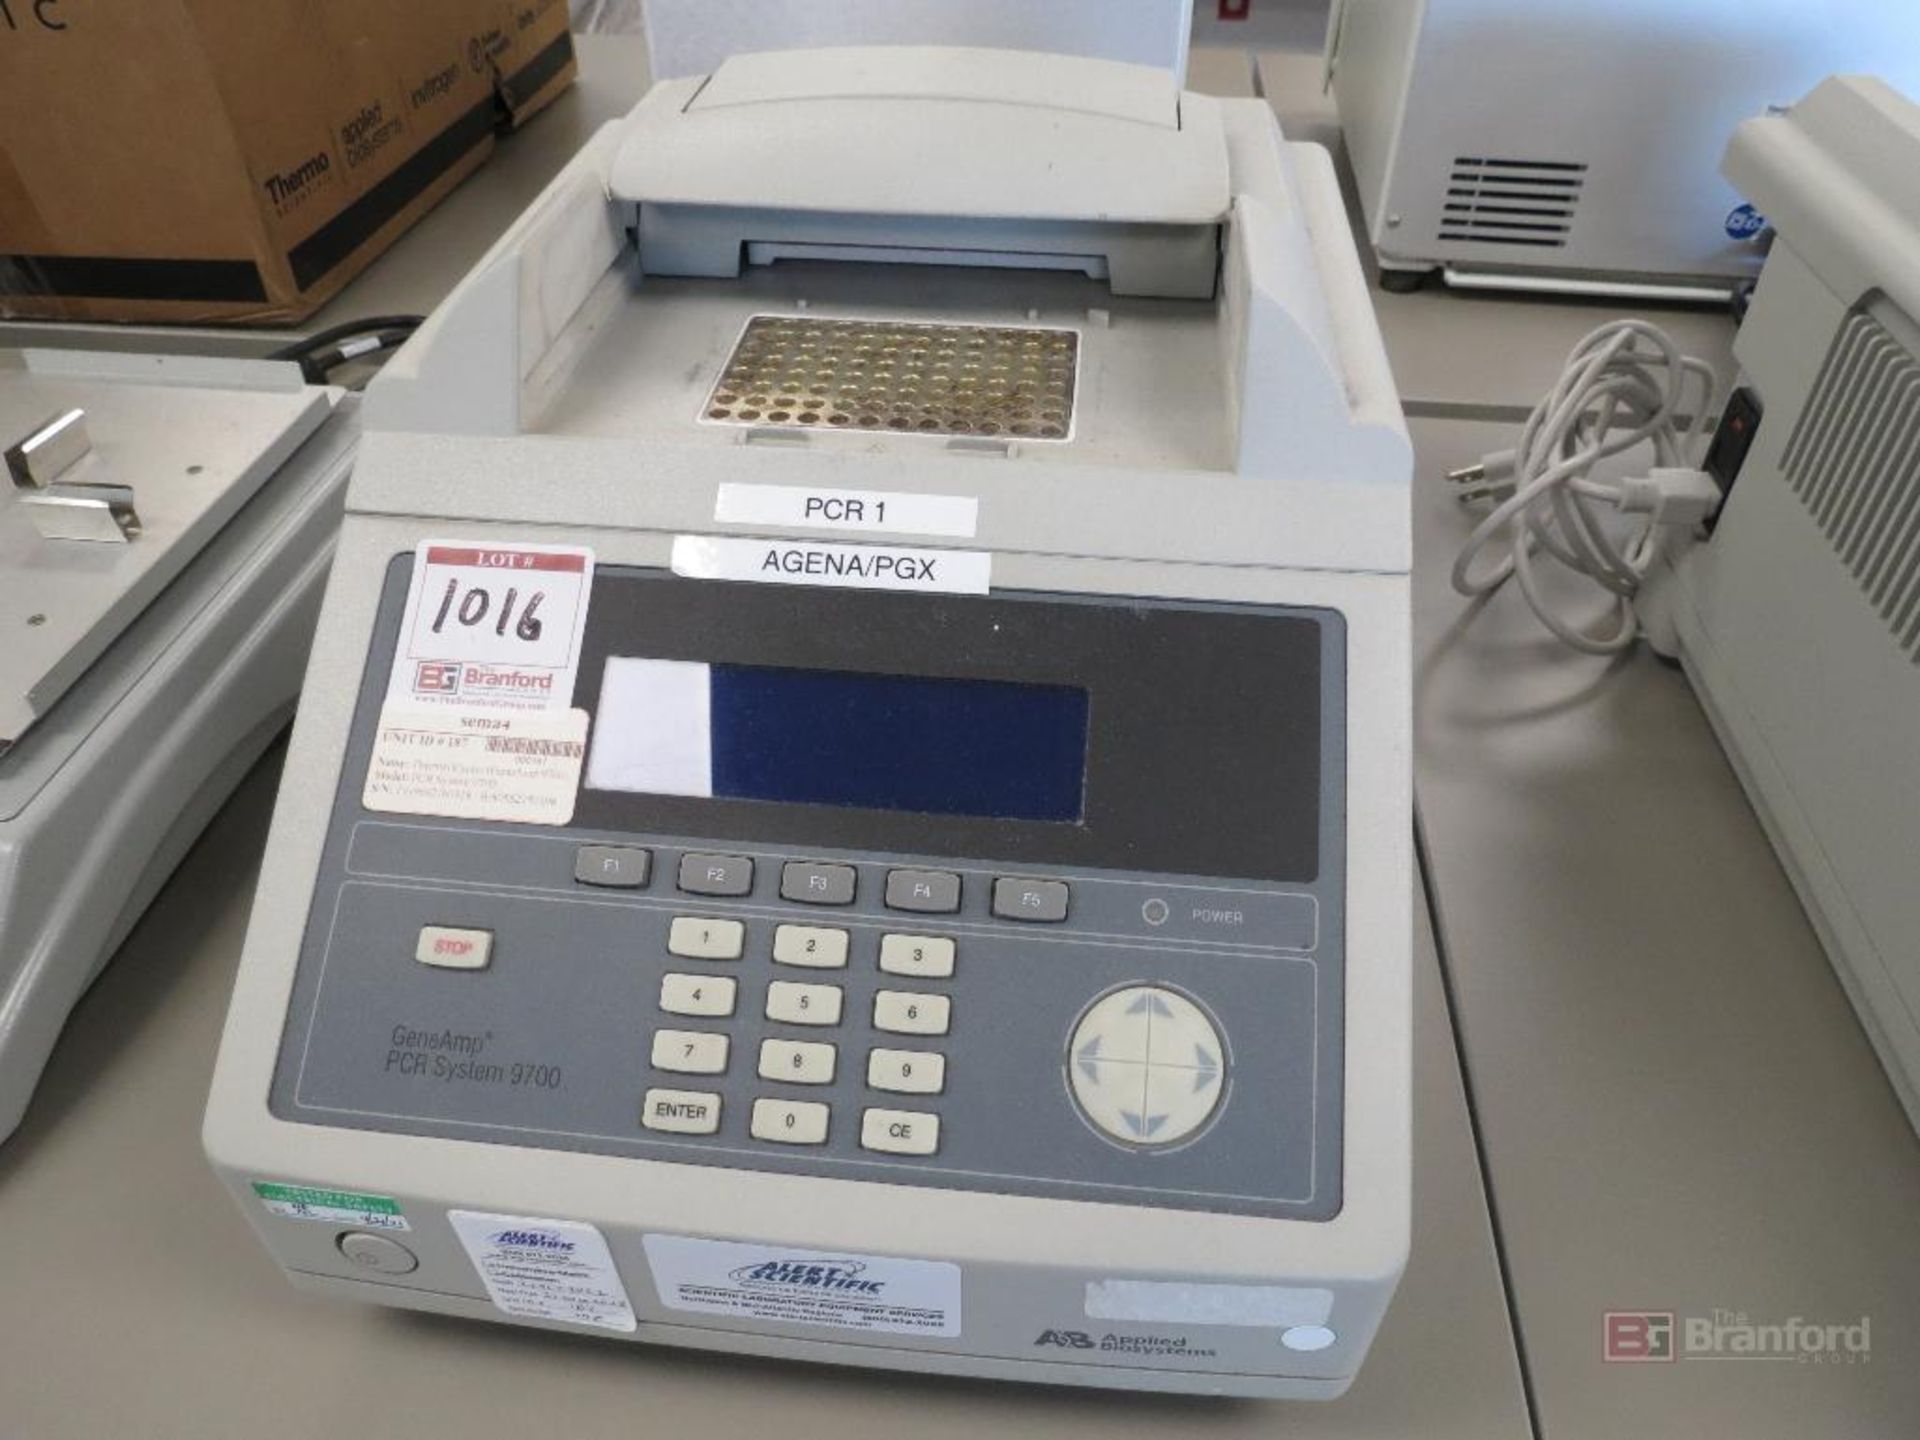 Applied Biosystems GeneAmp PCR System 9700